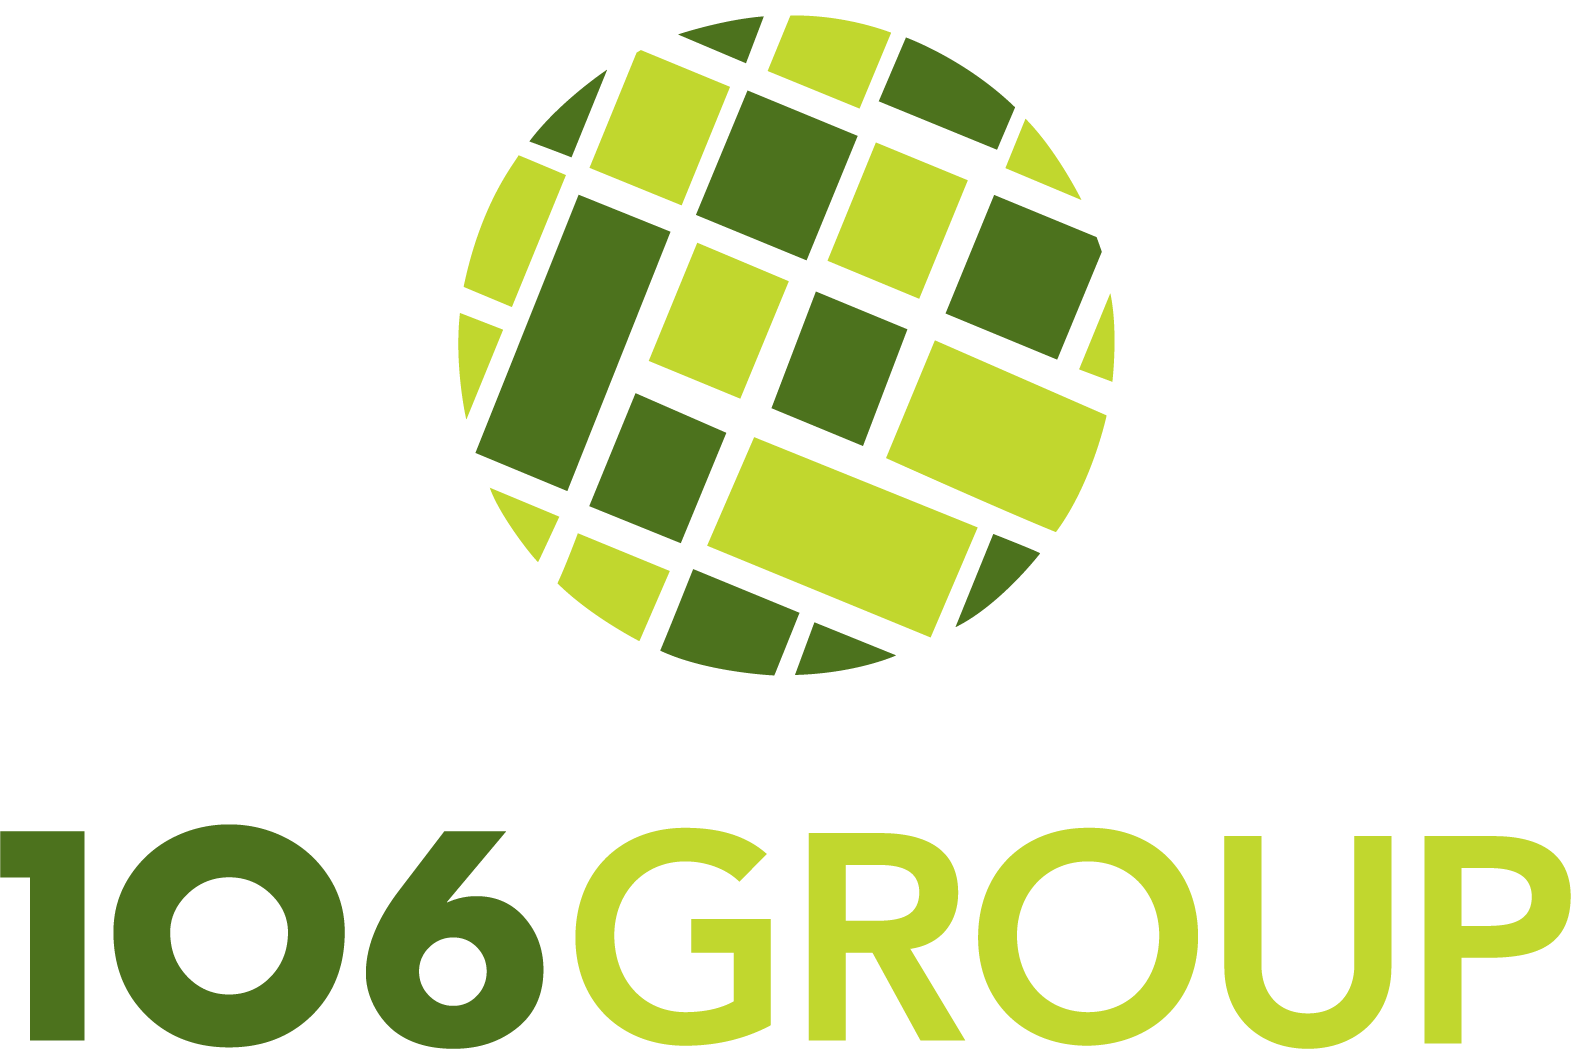 The 106 Group Ltd.